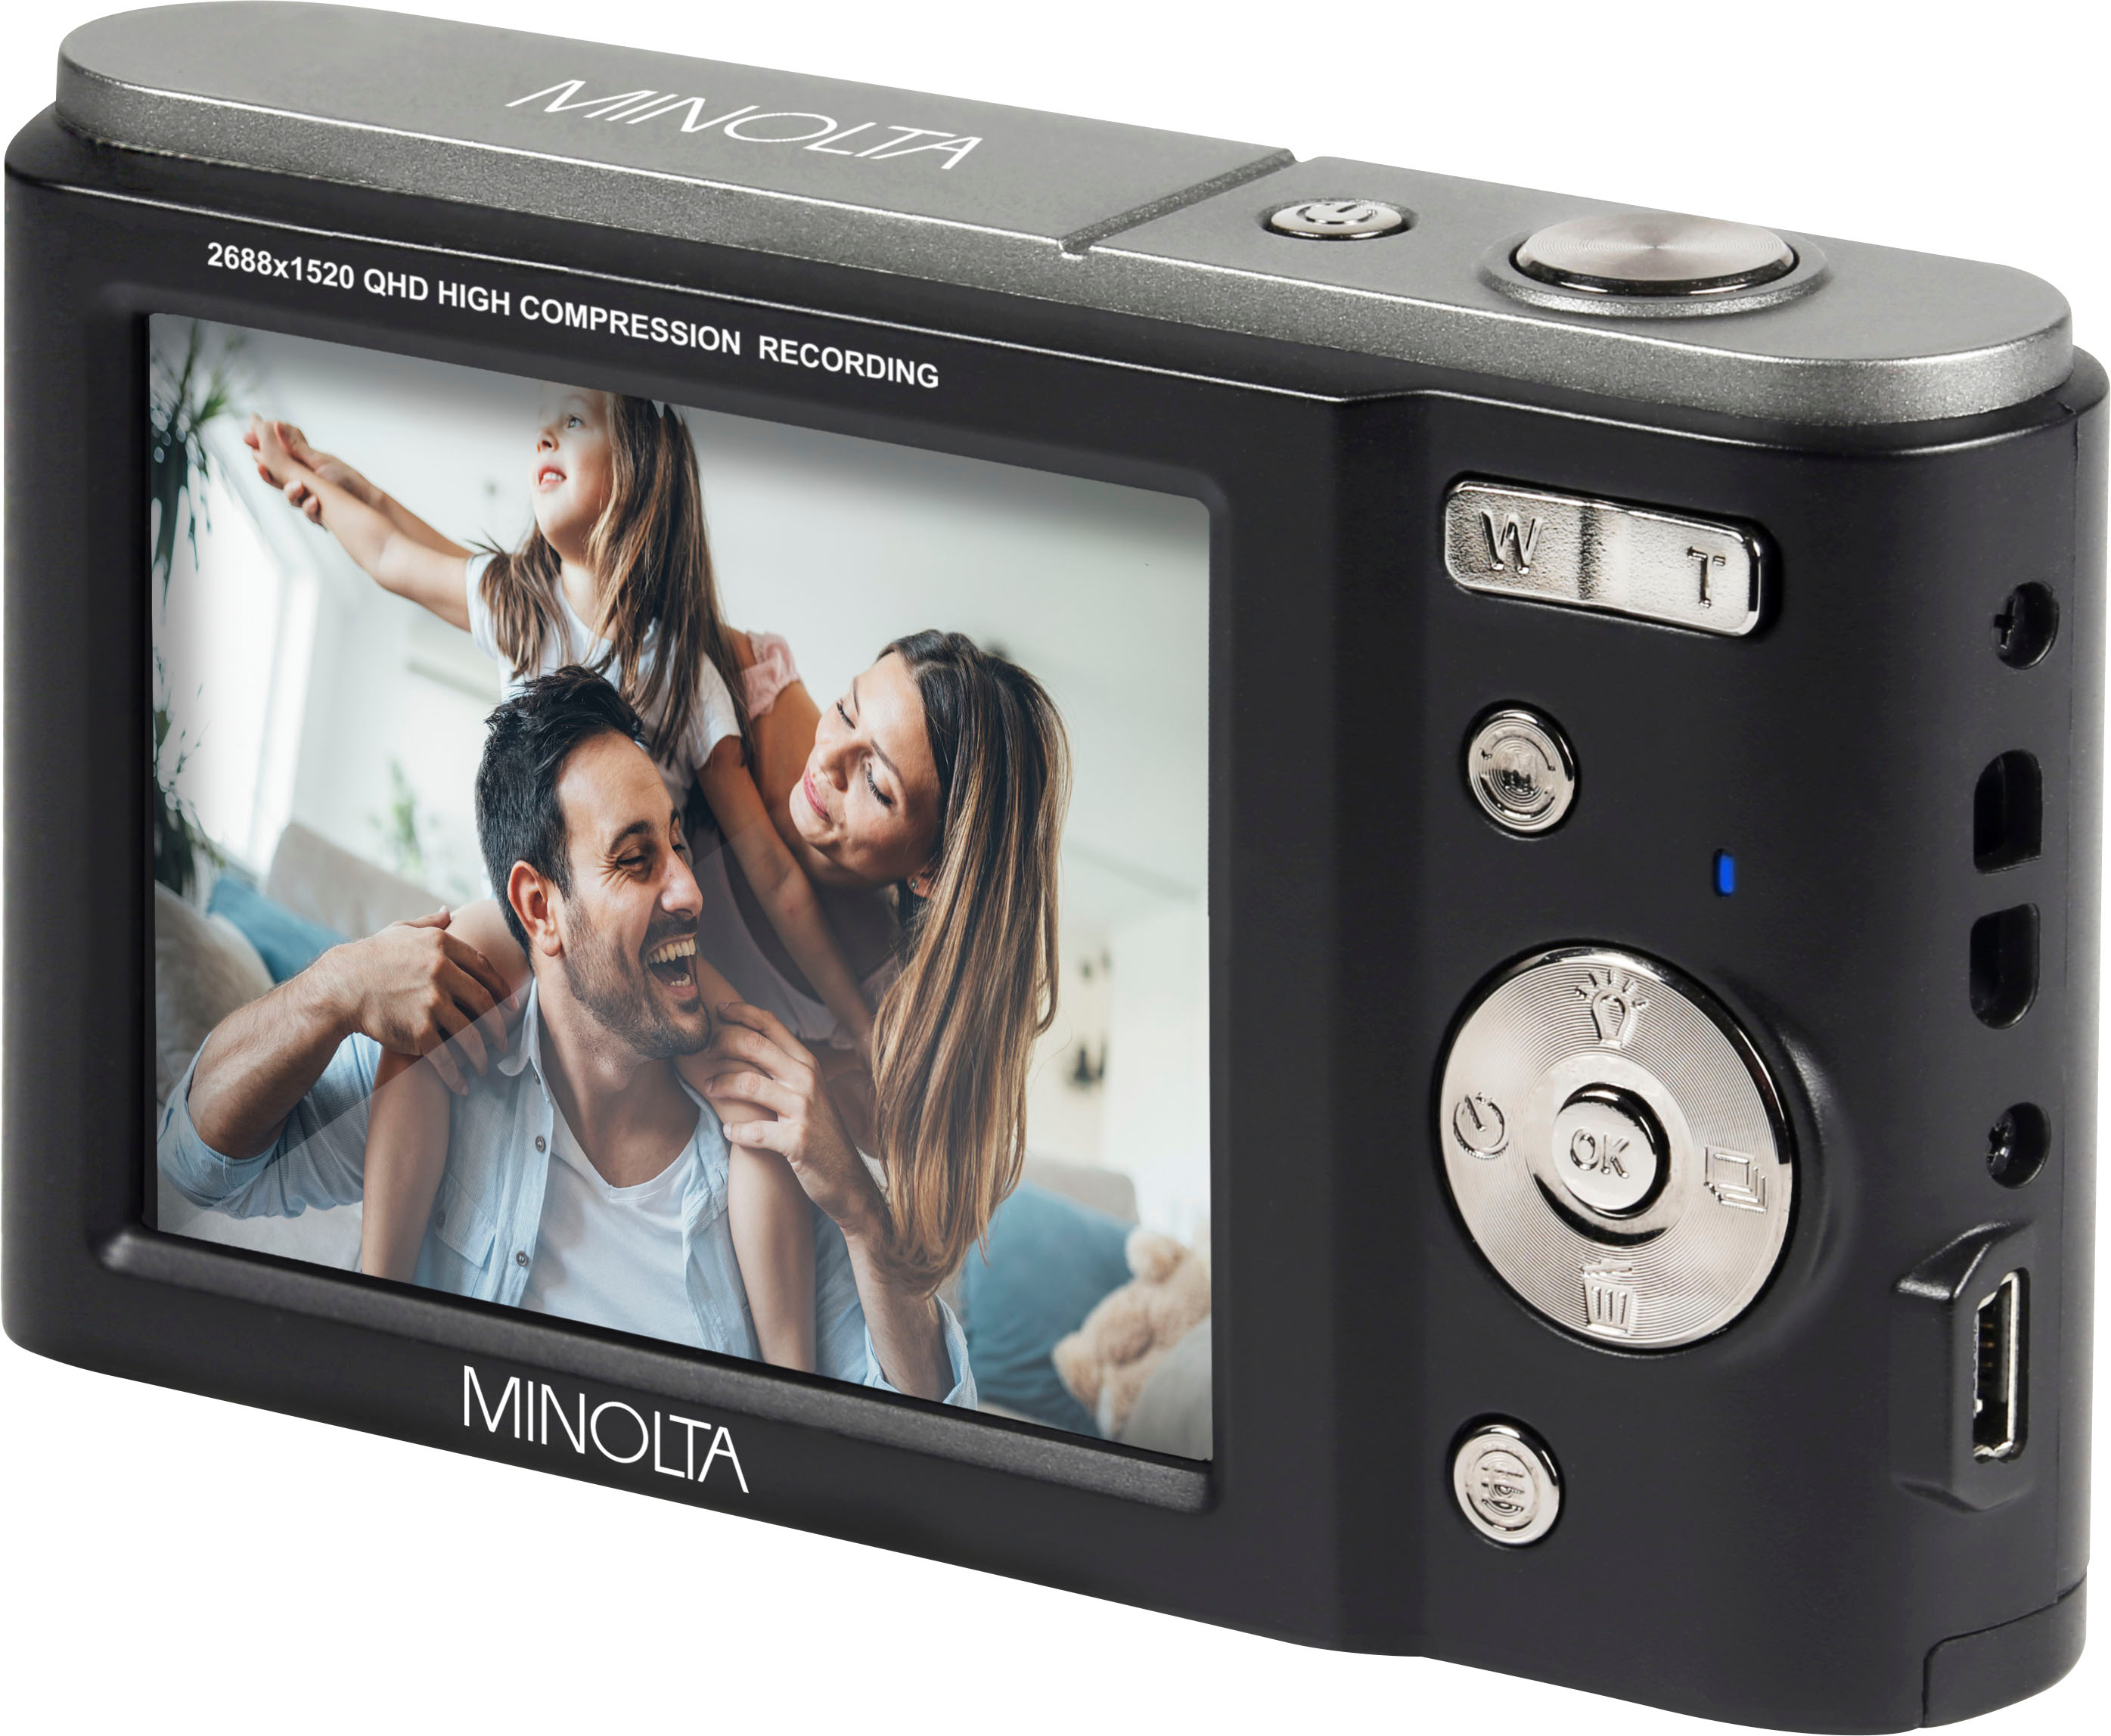 Minolta MND30 30.0 Megapixel Digital Camera Black MND30-BK - Best Buy